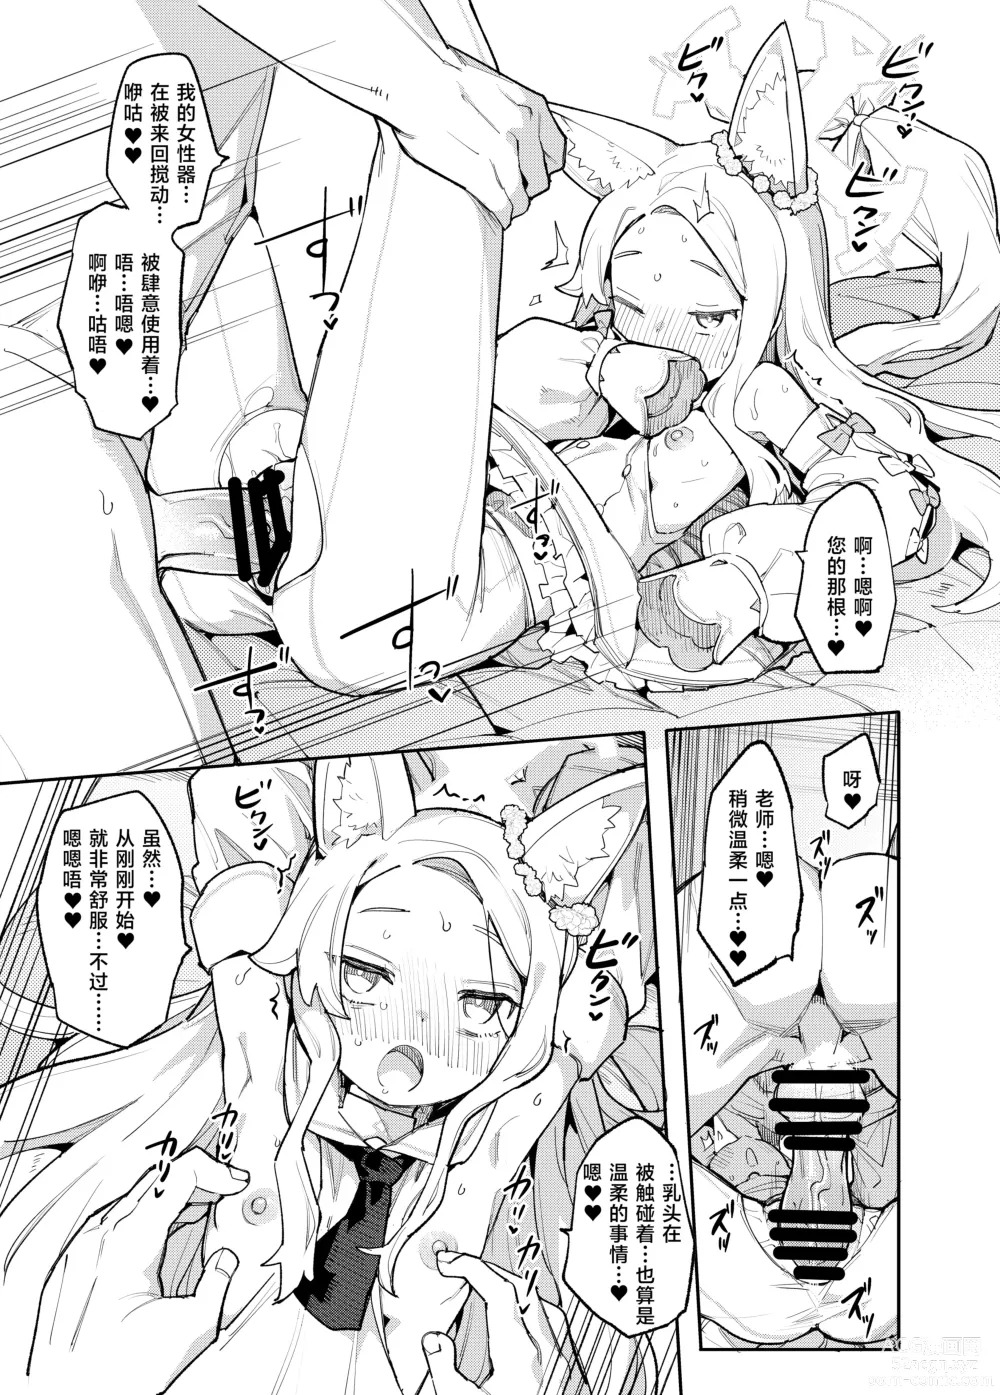 Page 12 of doujinshi 雌性狐狸看到了充满色情的未来